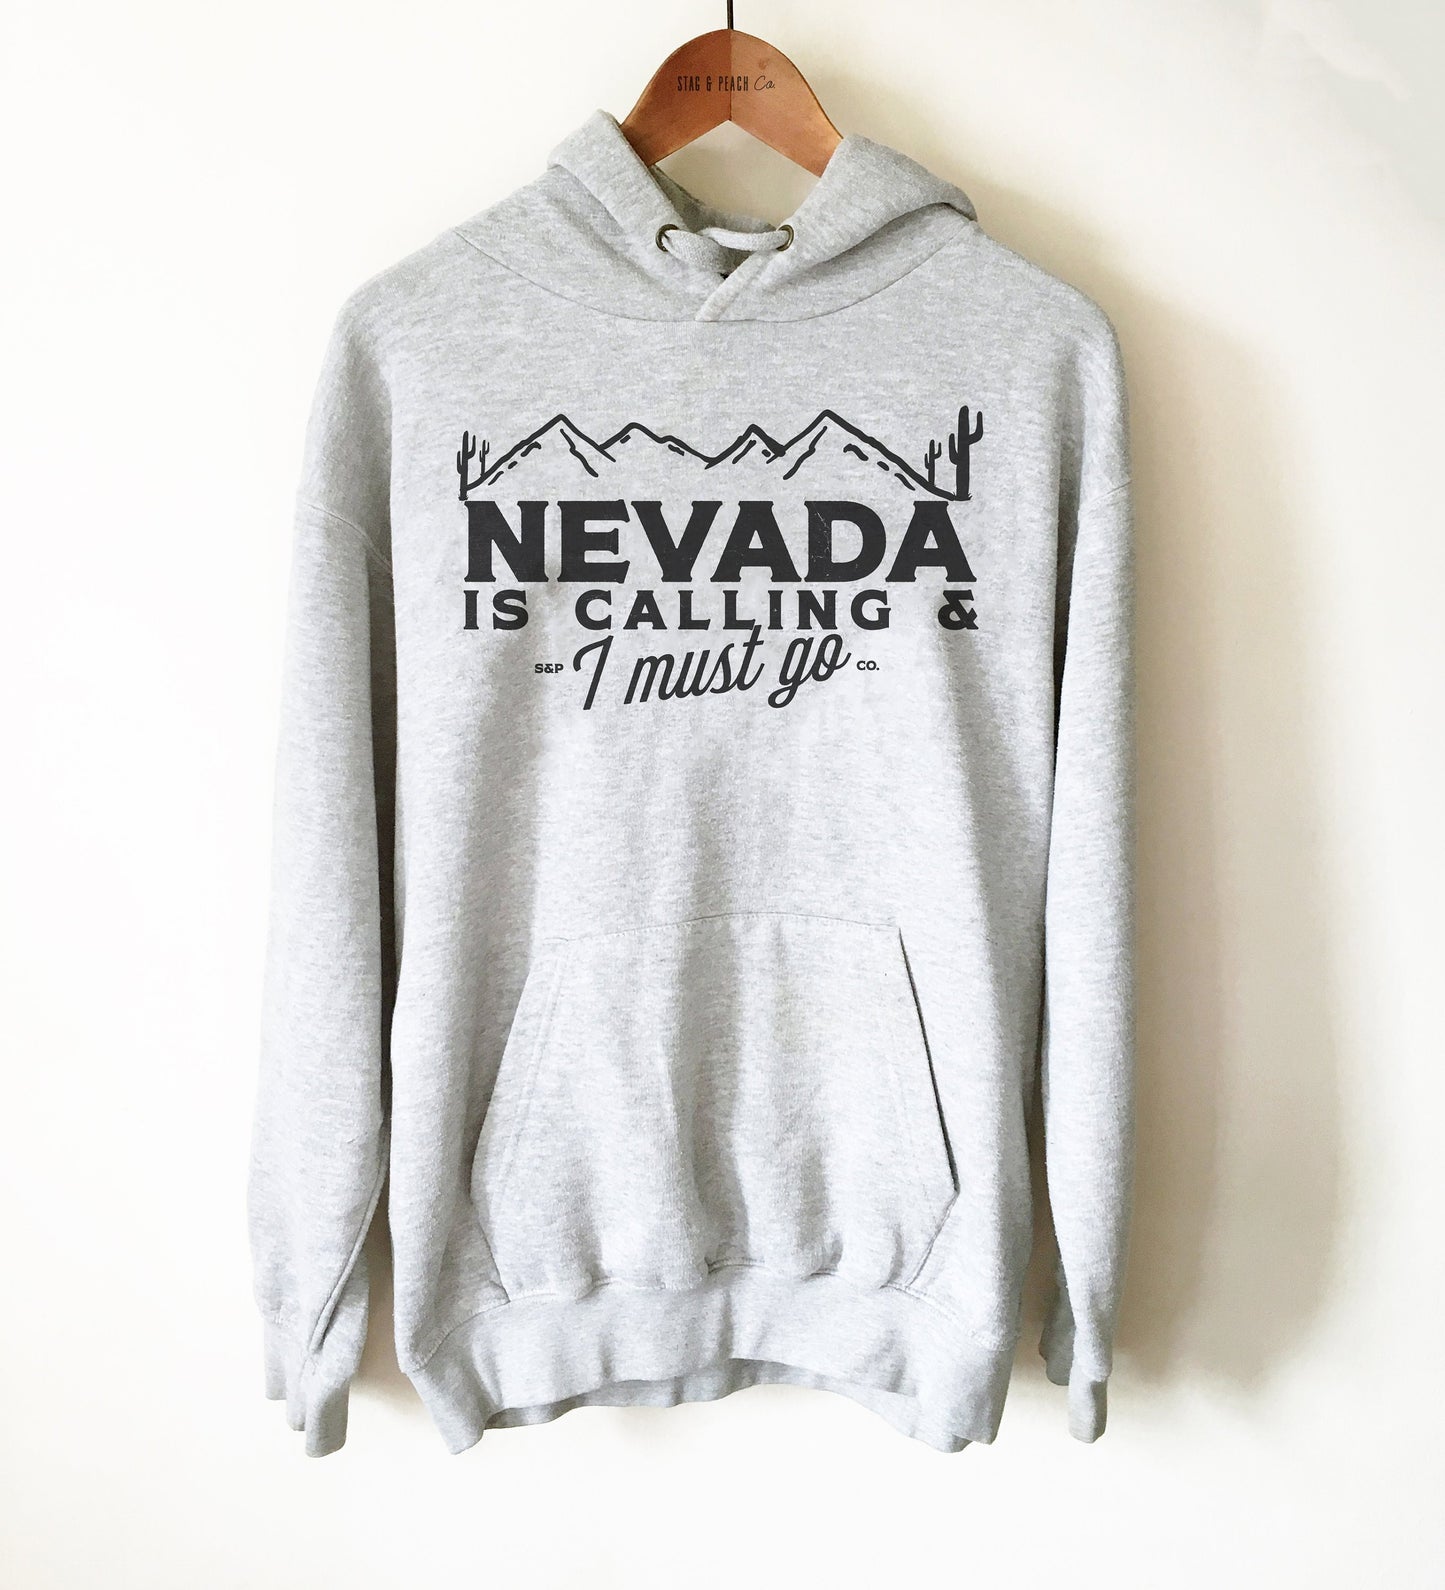 Nevada Is Calling Hoodie - Nevada Shirt, Las Vegas Shirt, State Pride Sweatshirt, Carson City Gift, Silver State Shirt, Desert Shirt